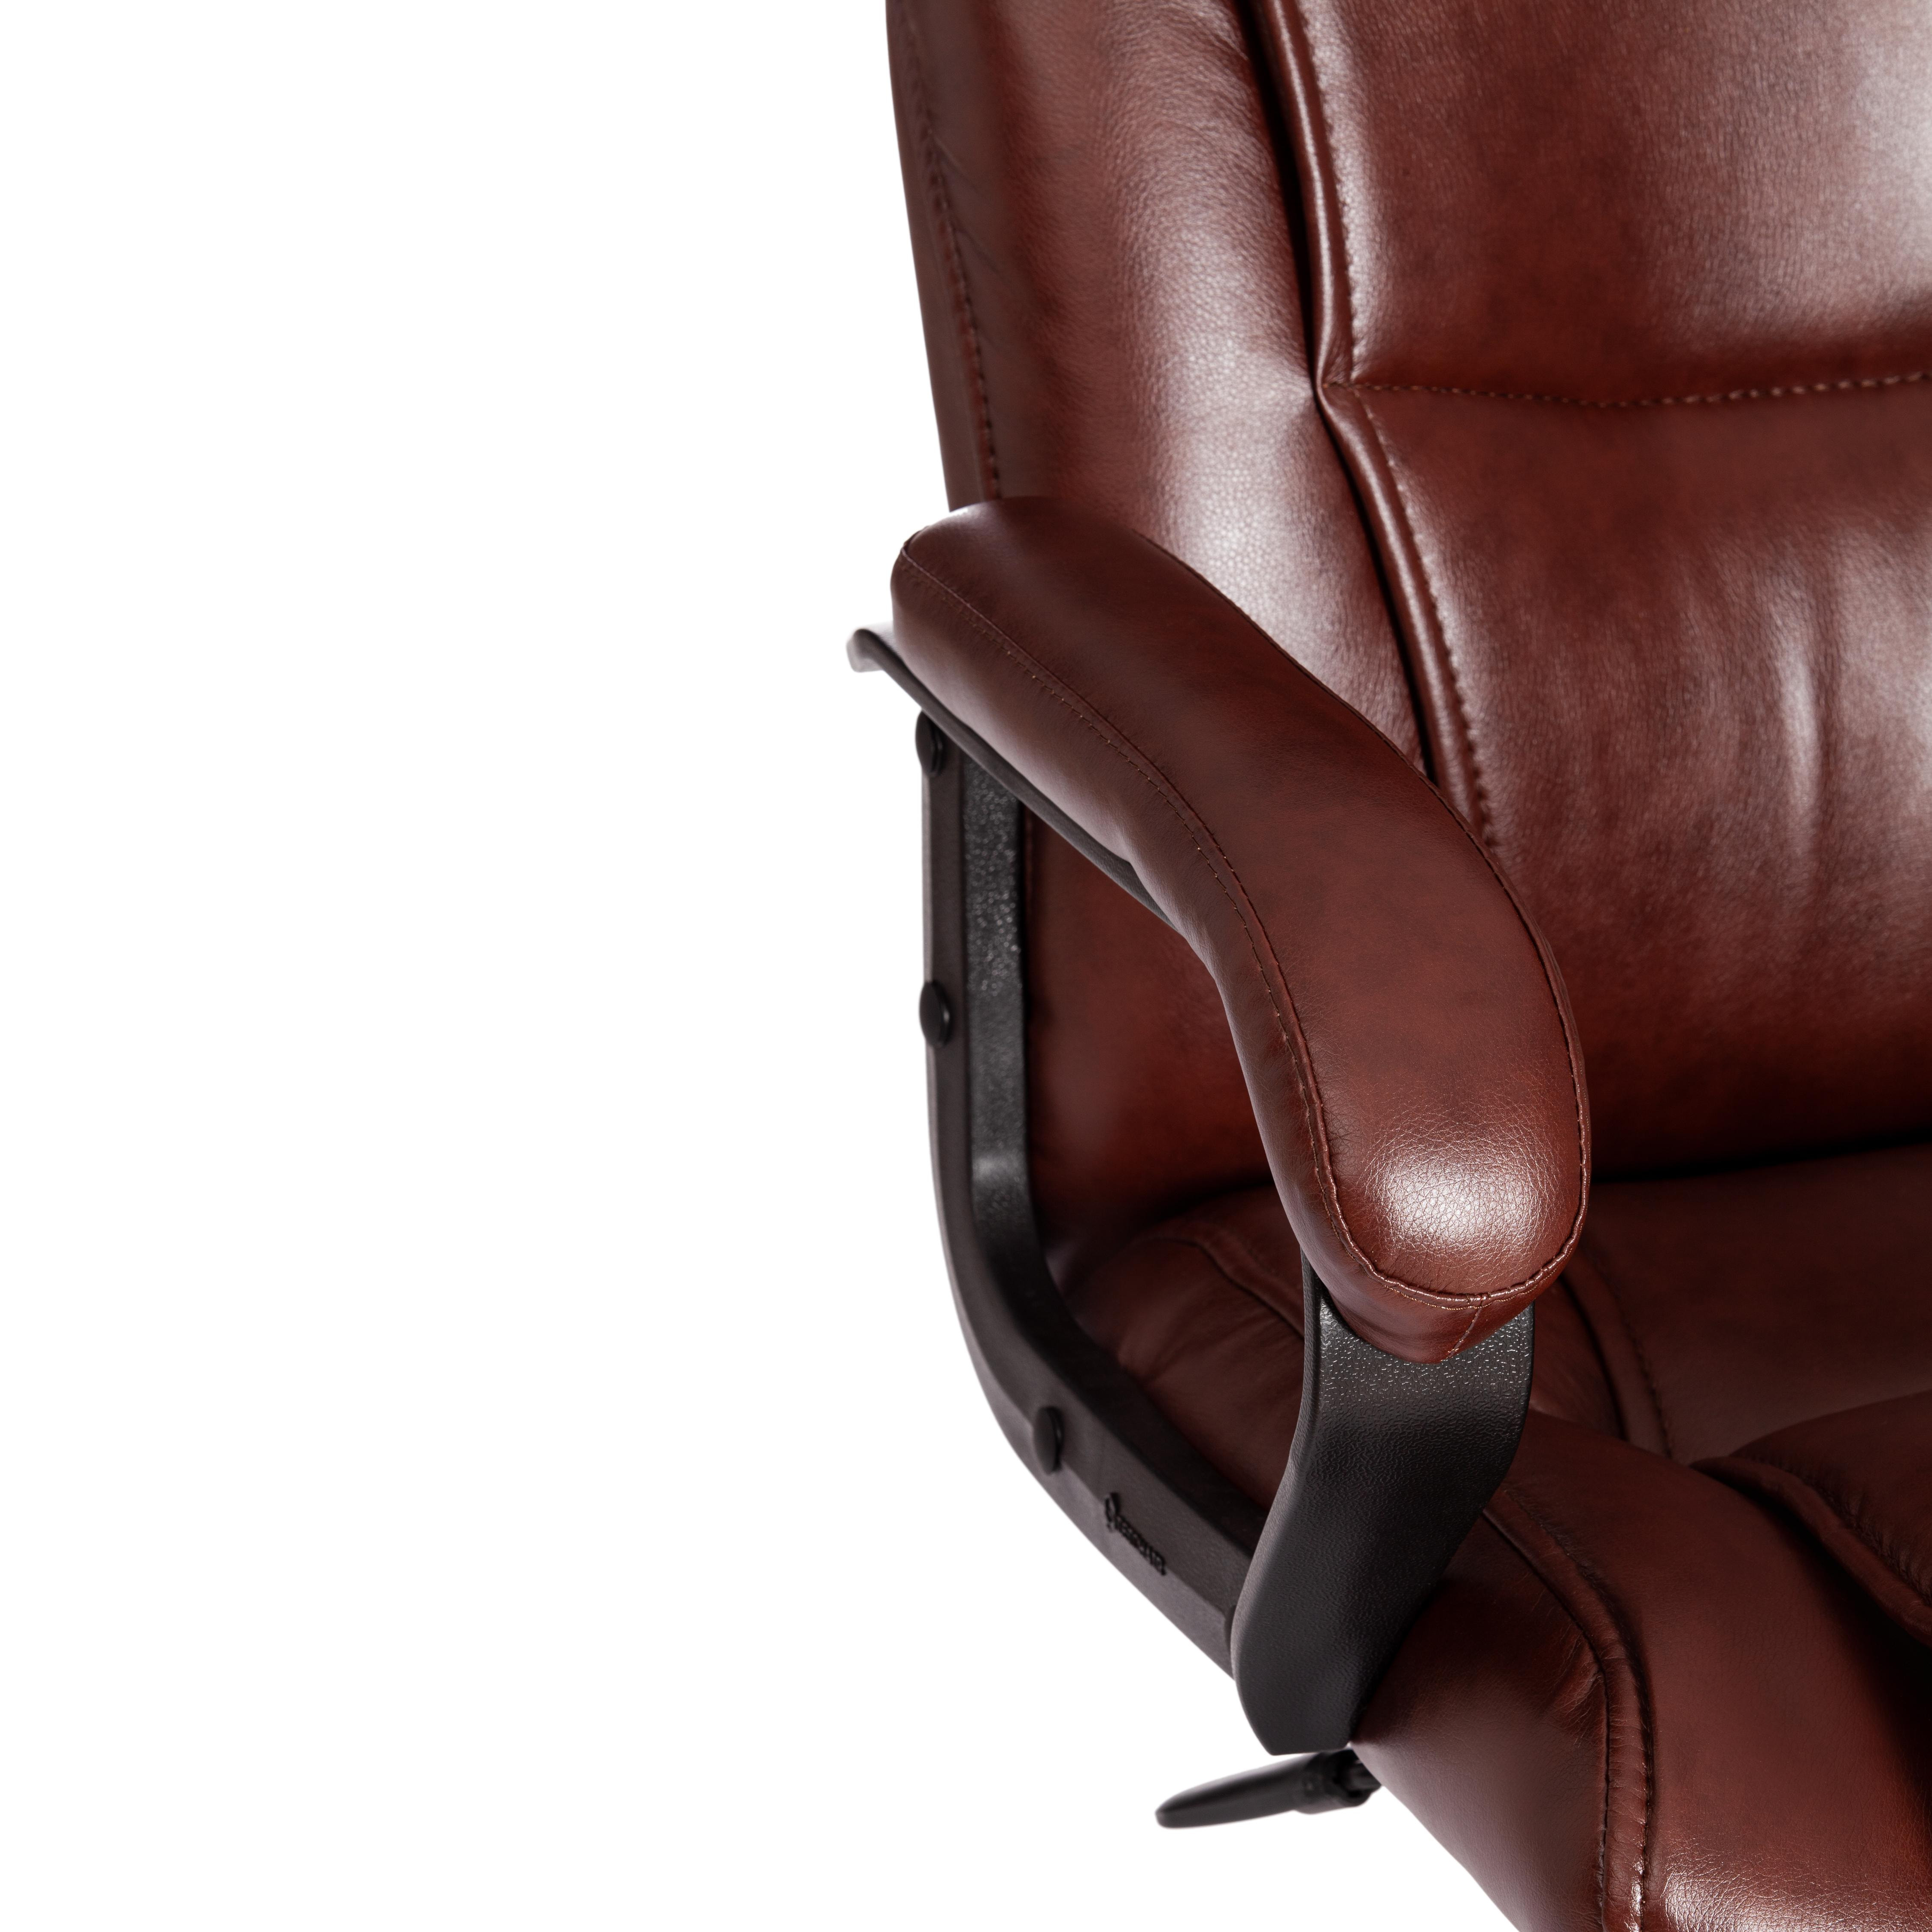 Кресло BERGAMO хром (22) кож/зам, коричневый, 2 TONE